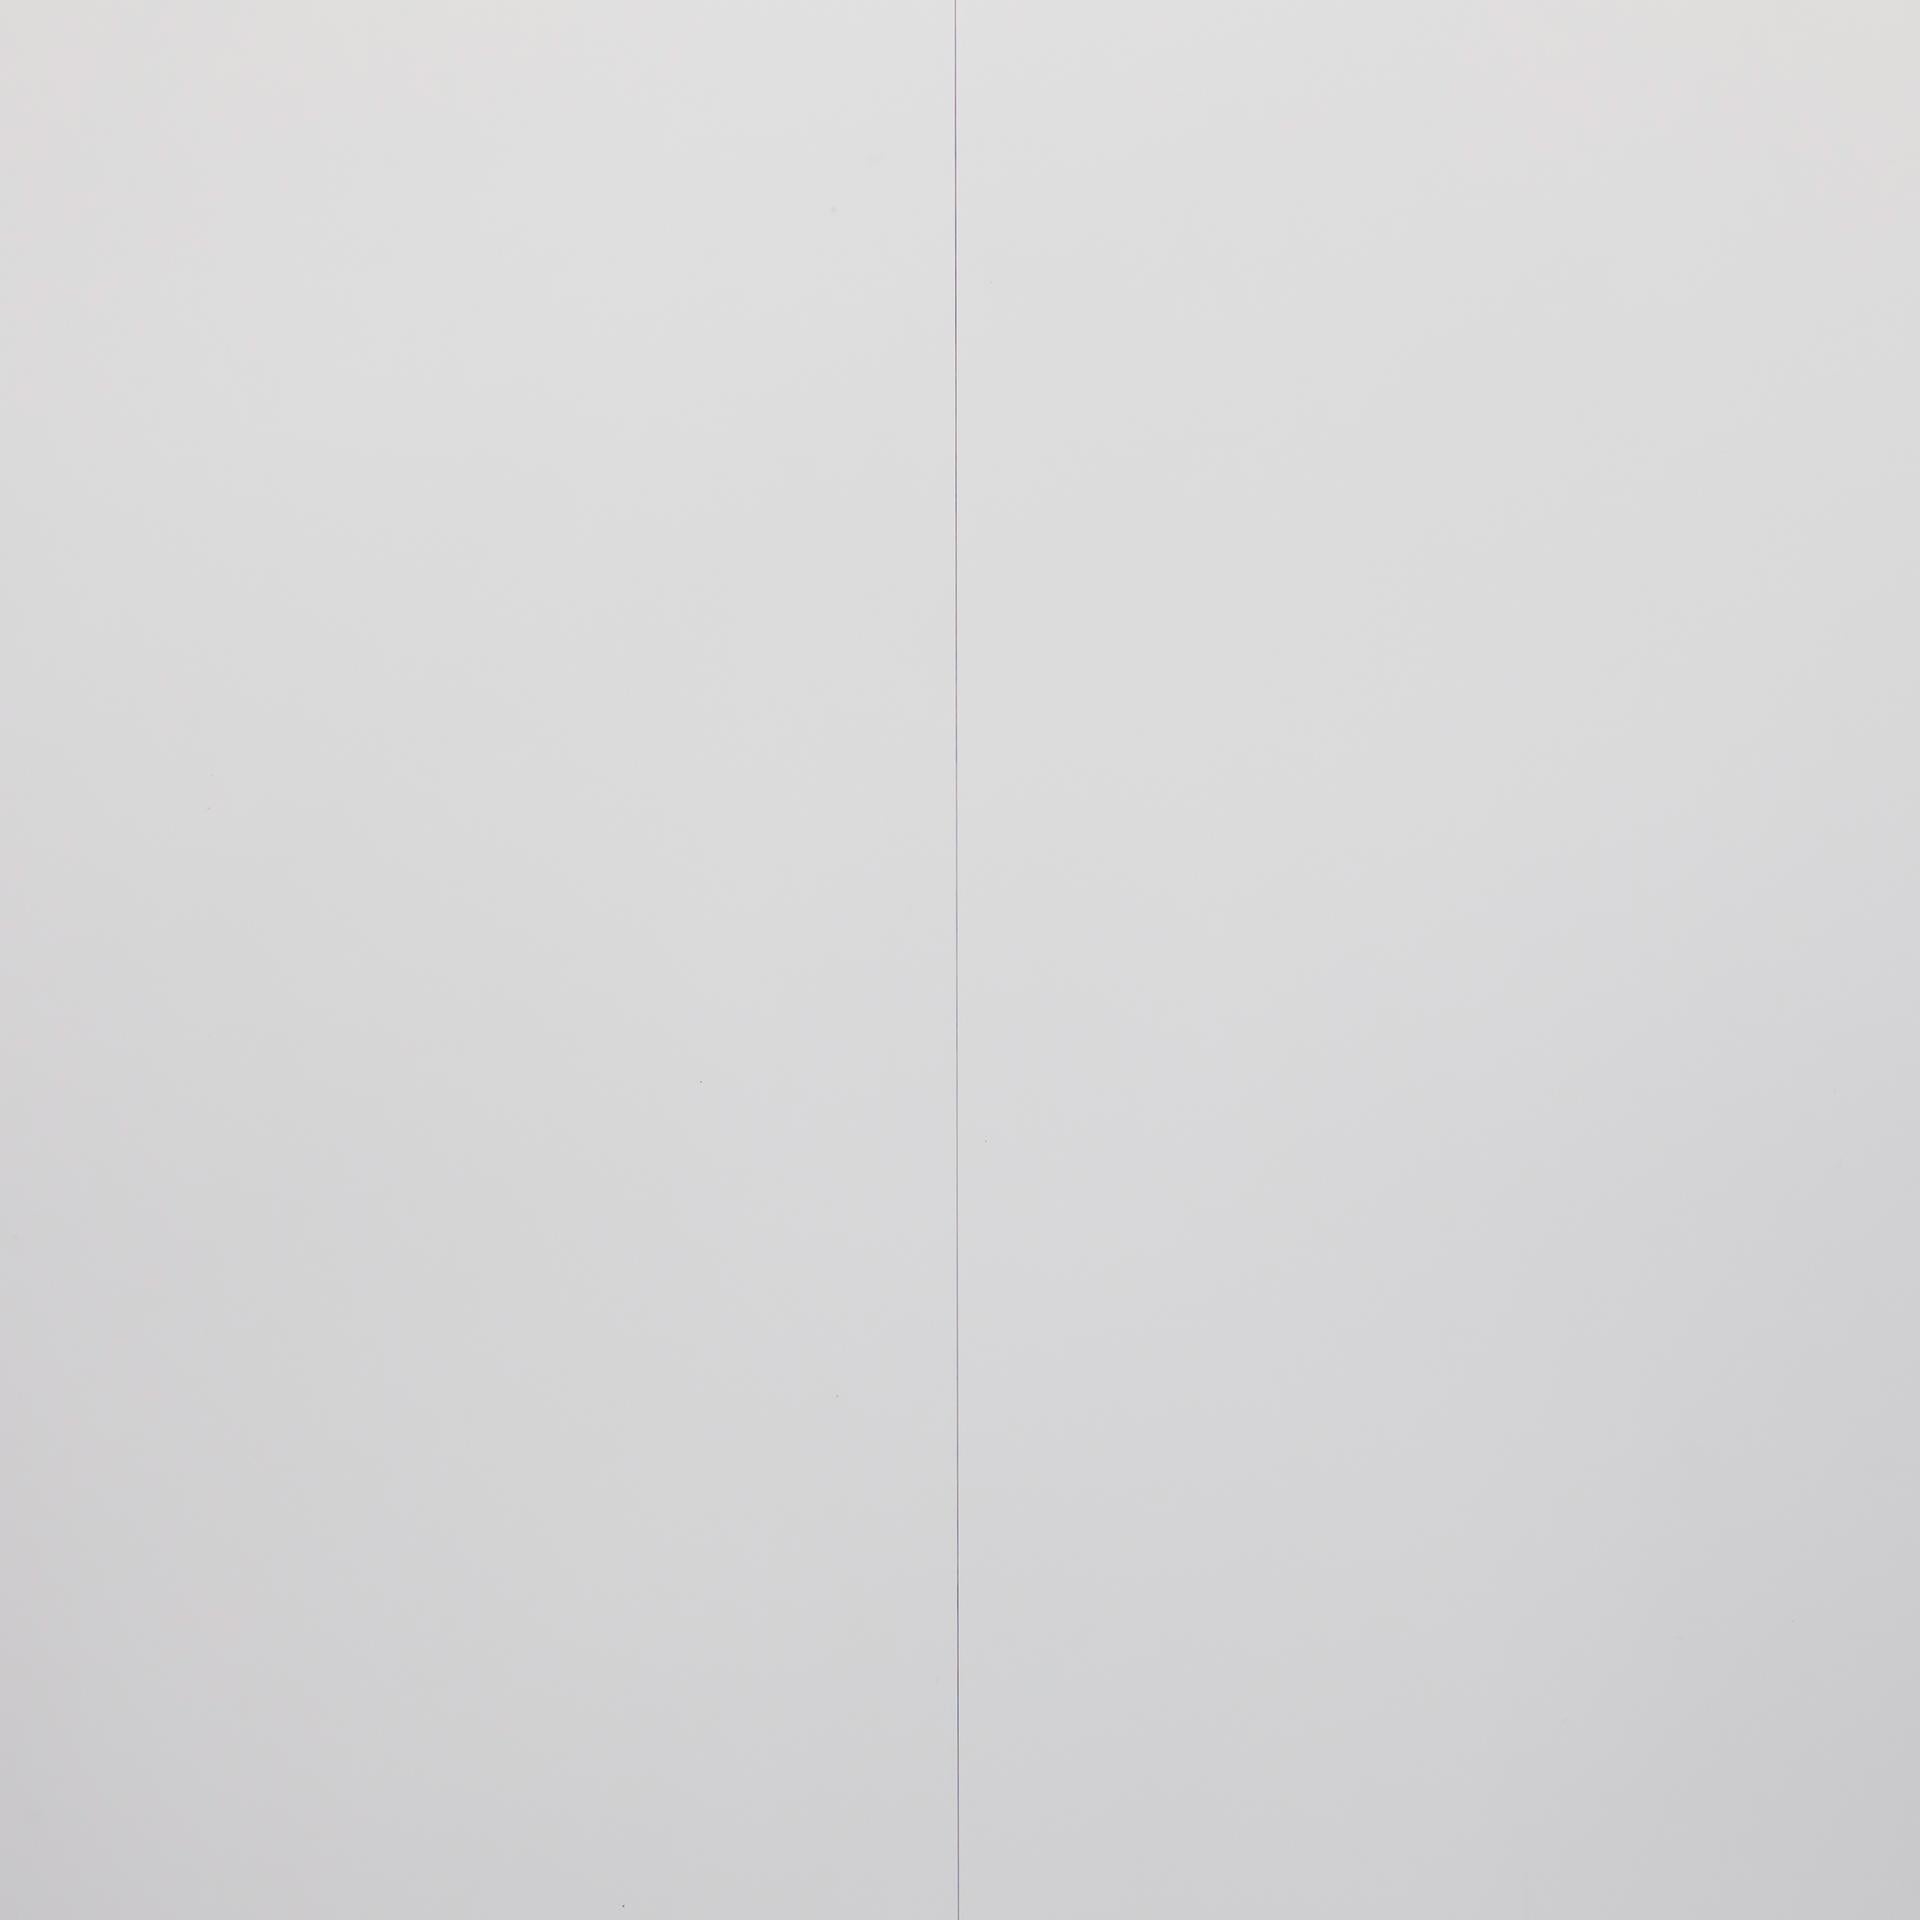 Japanese Contemporary Art by Kojun - VM4 Wall-Gazing II  For Sale 5